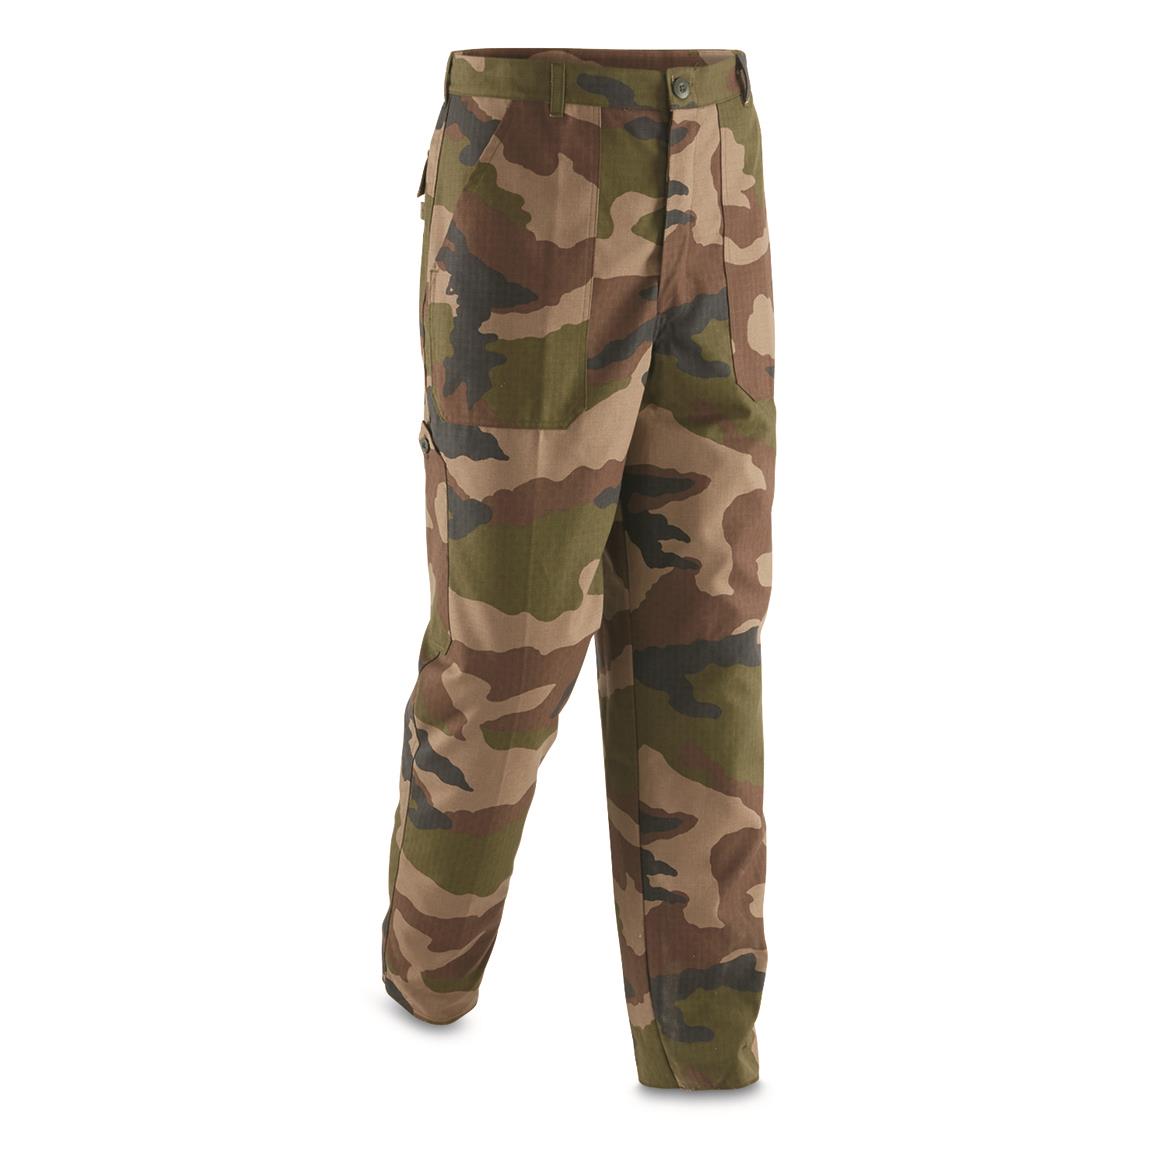 Original British Army Desert Camo Windproof Trousers Pants NEW Size 36-39 waist 